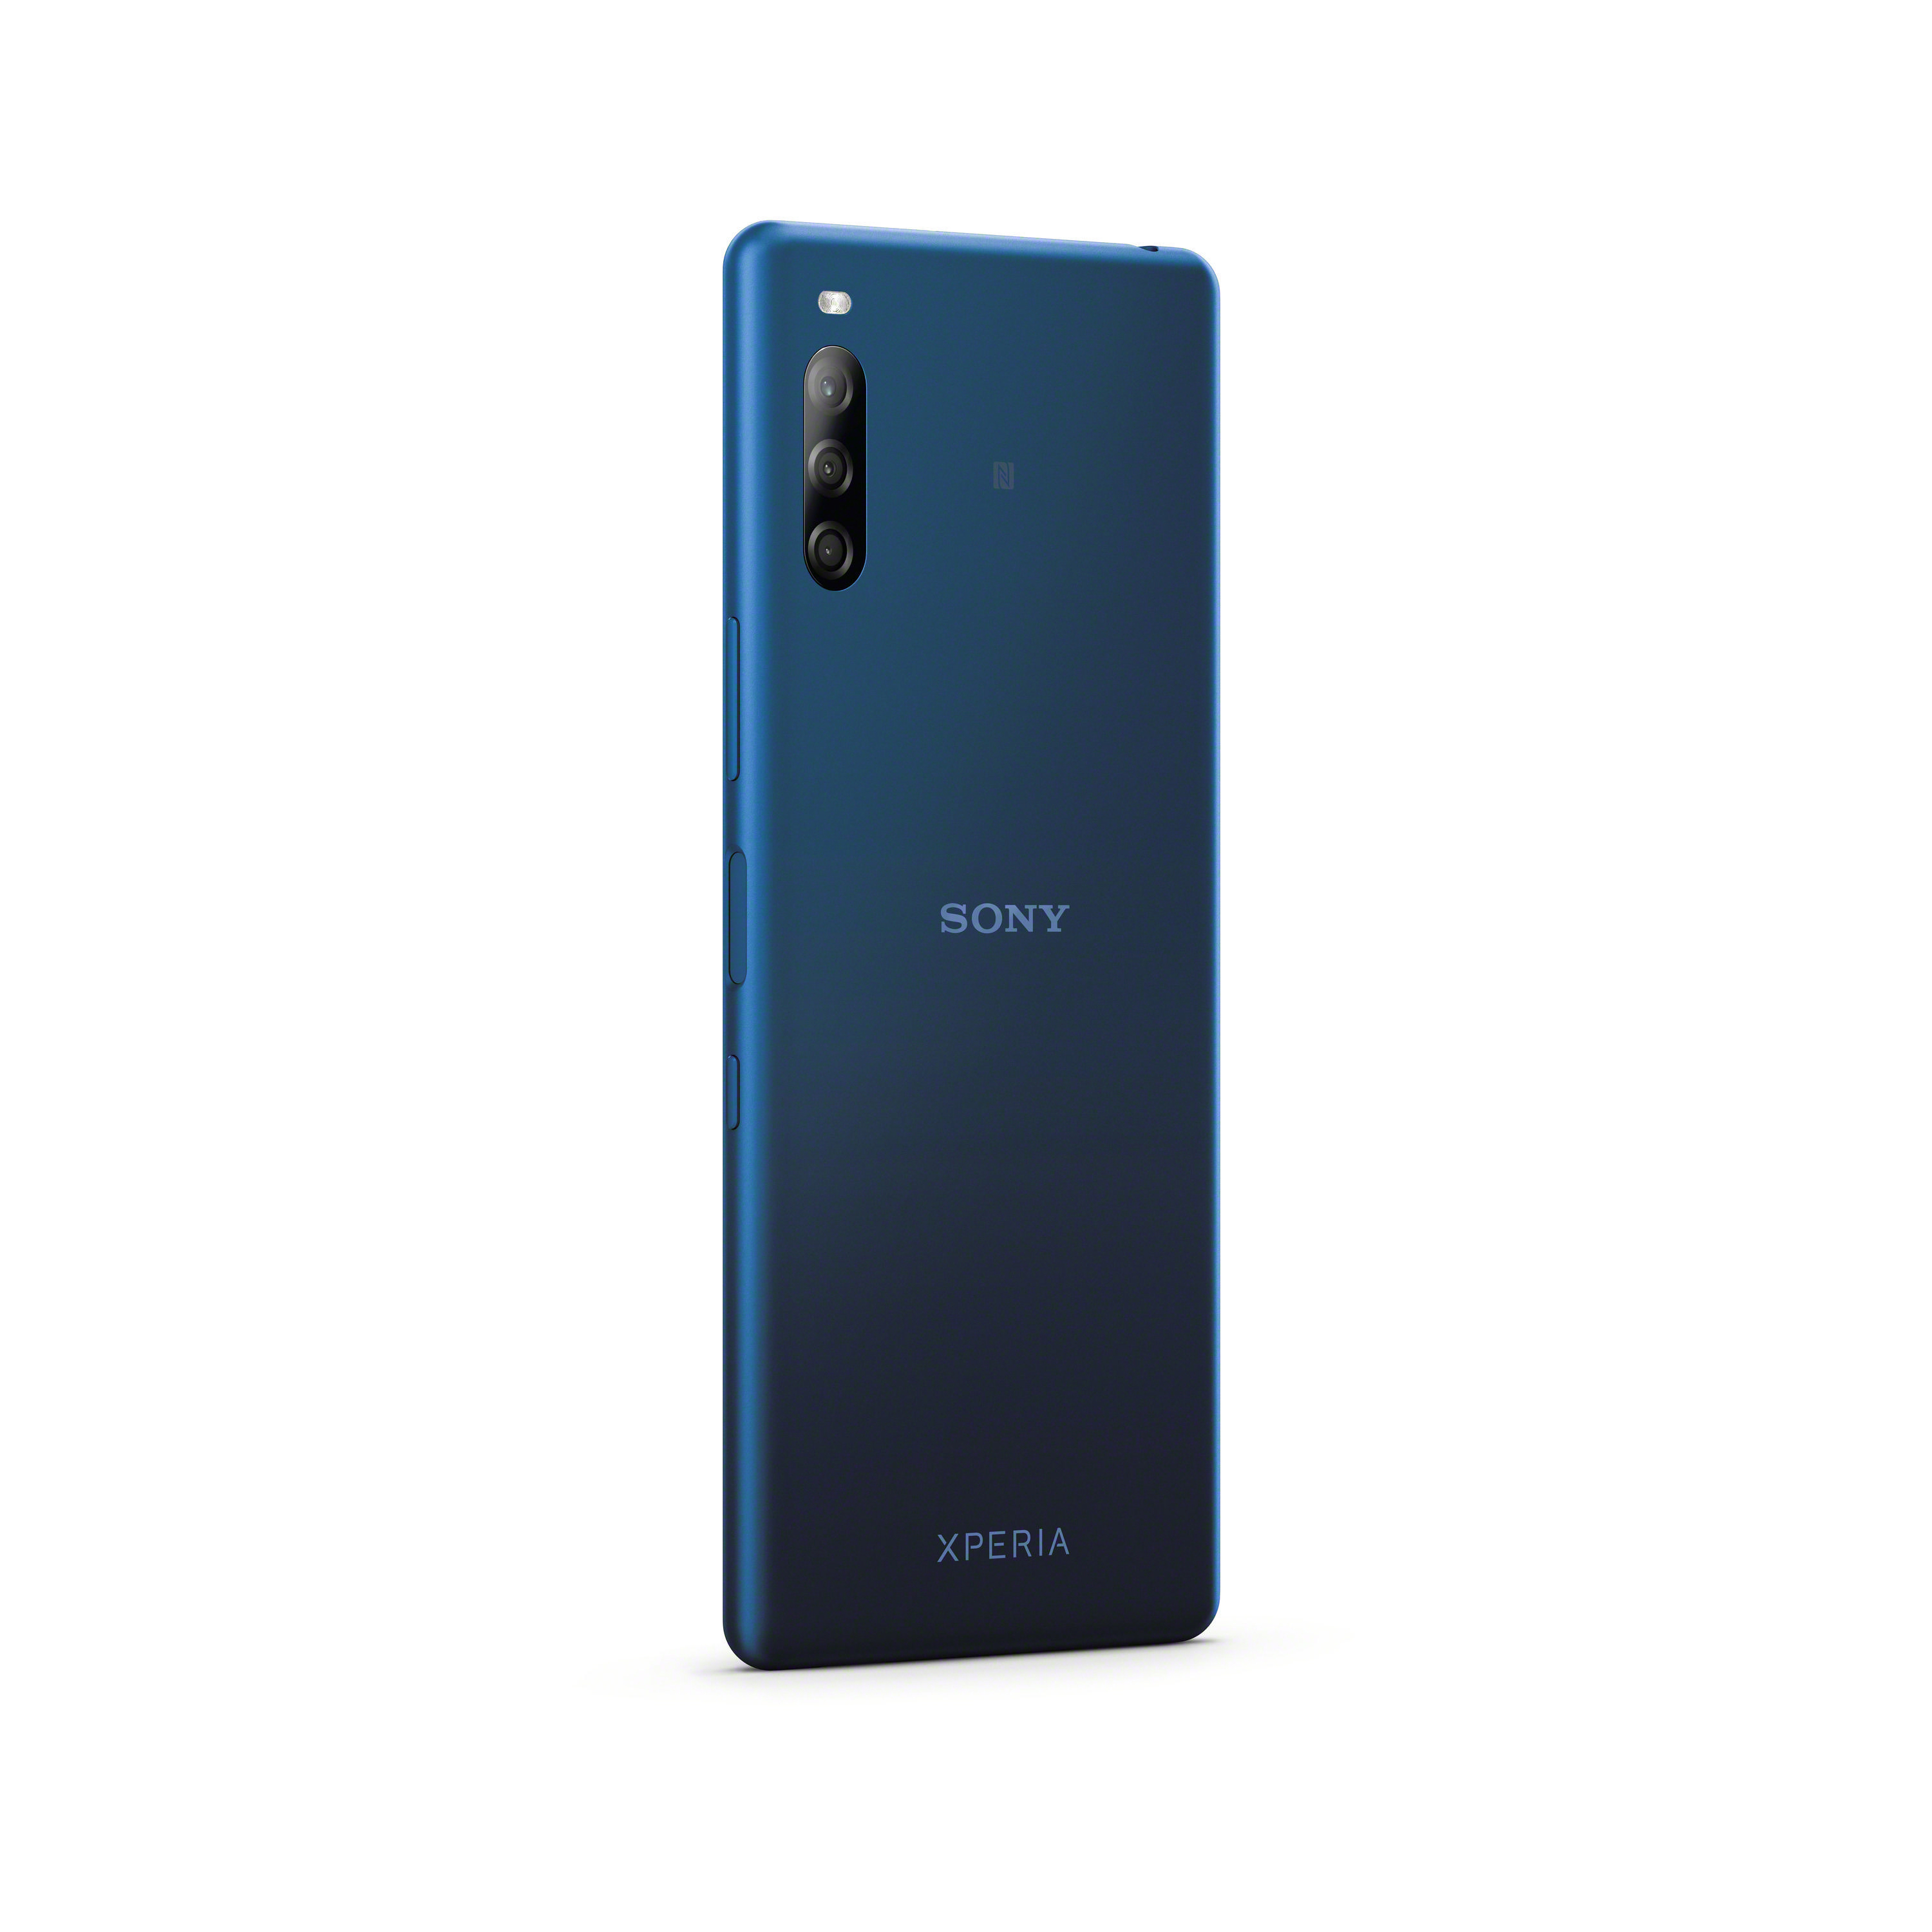 Dual GB SIM Display L4 Xperia 21:9 SONY 64 Blau